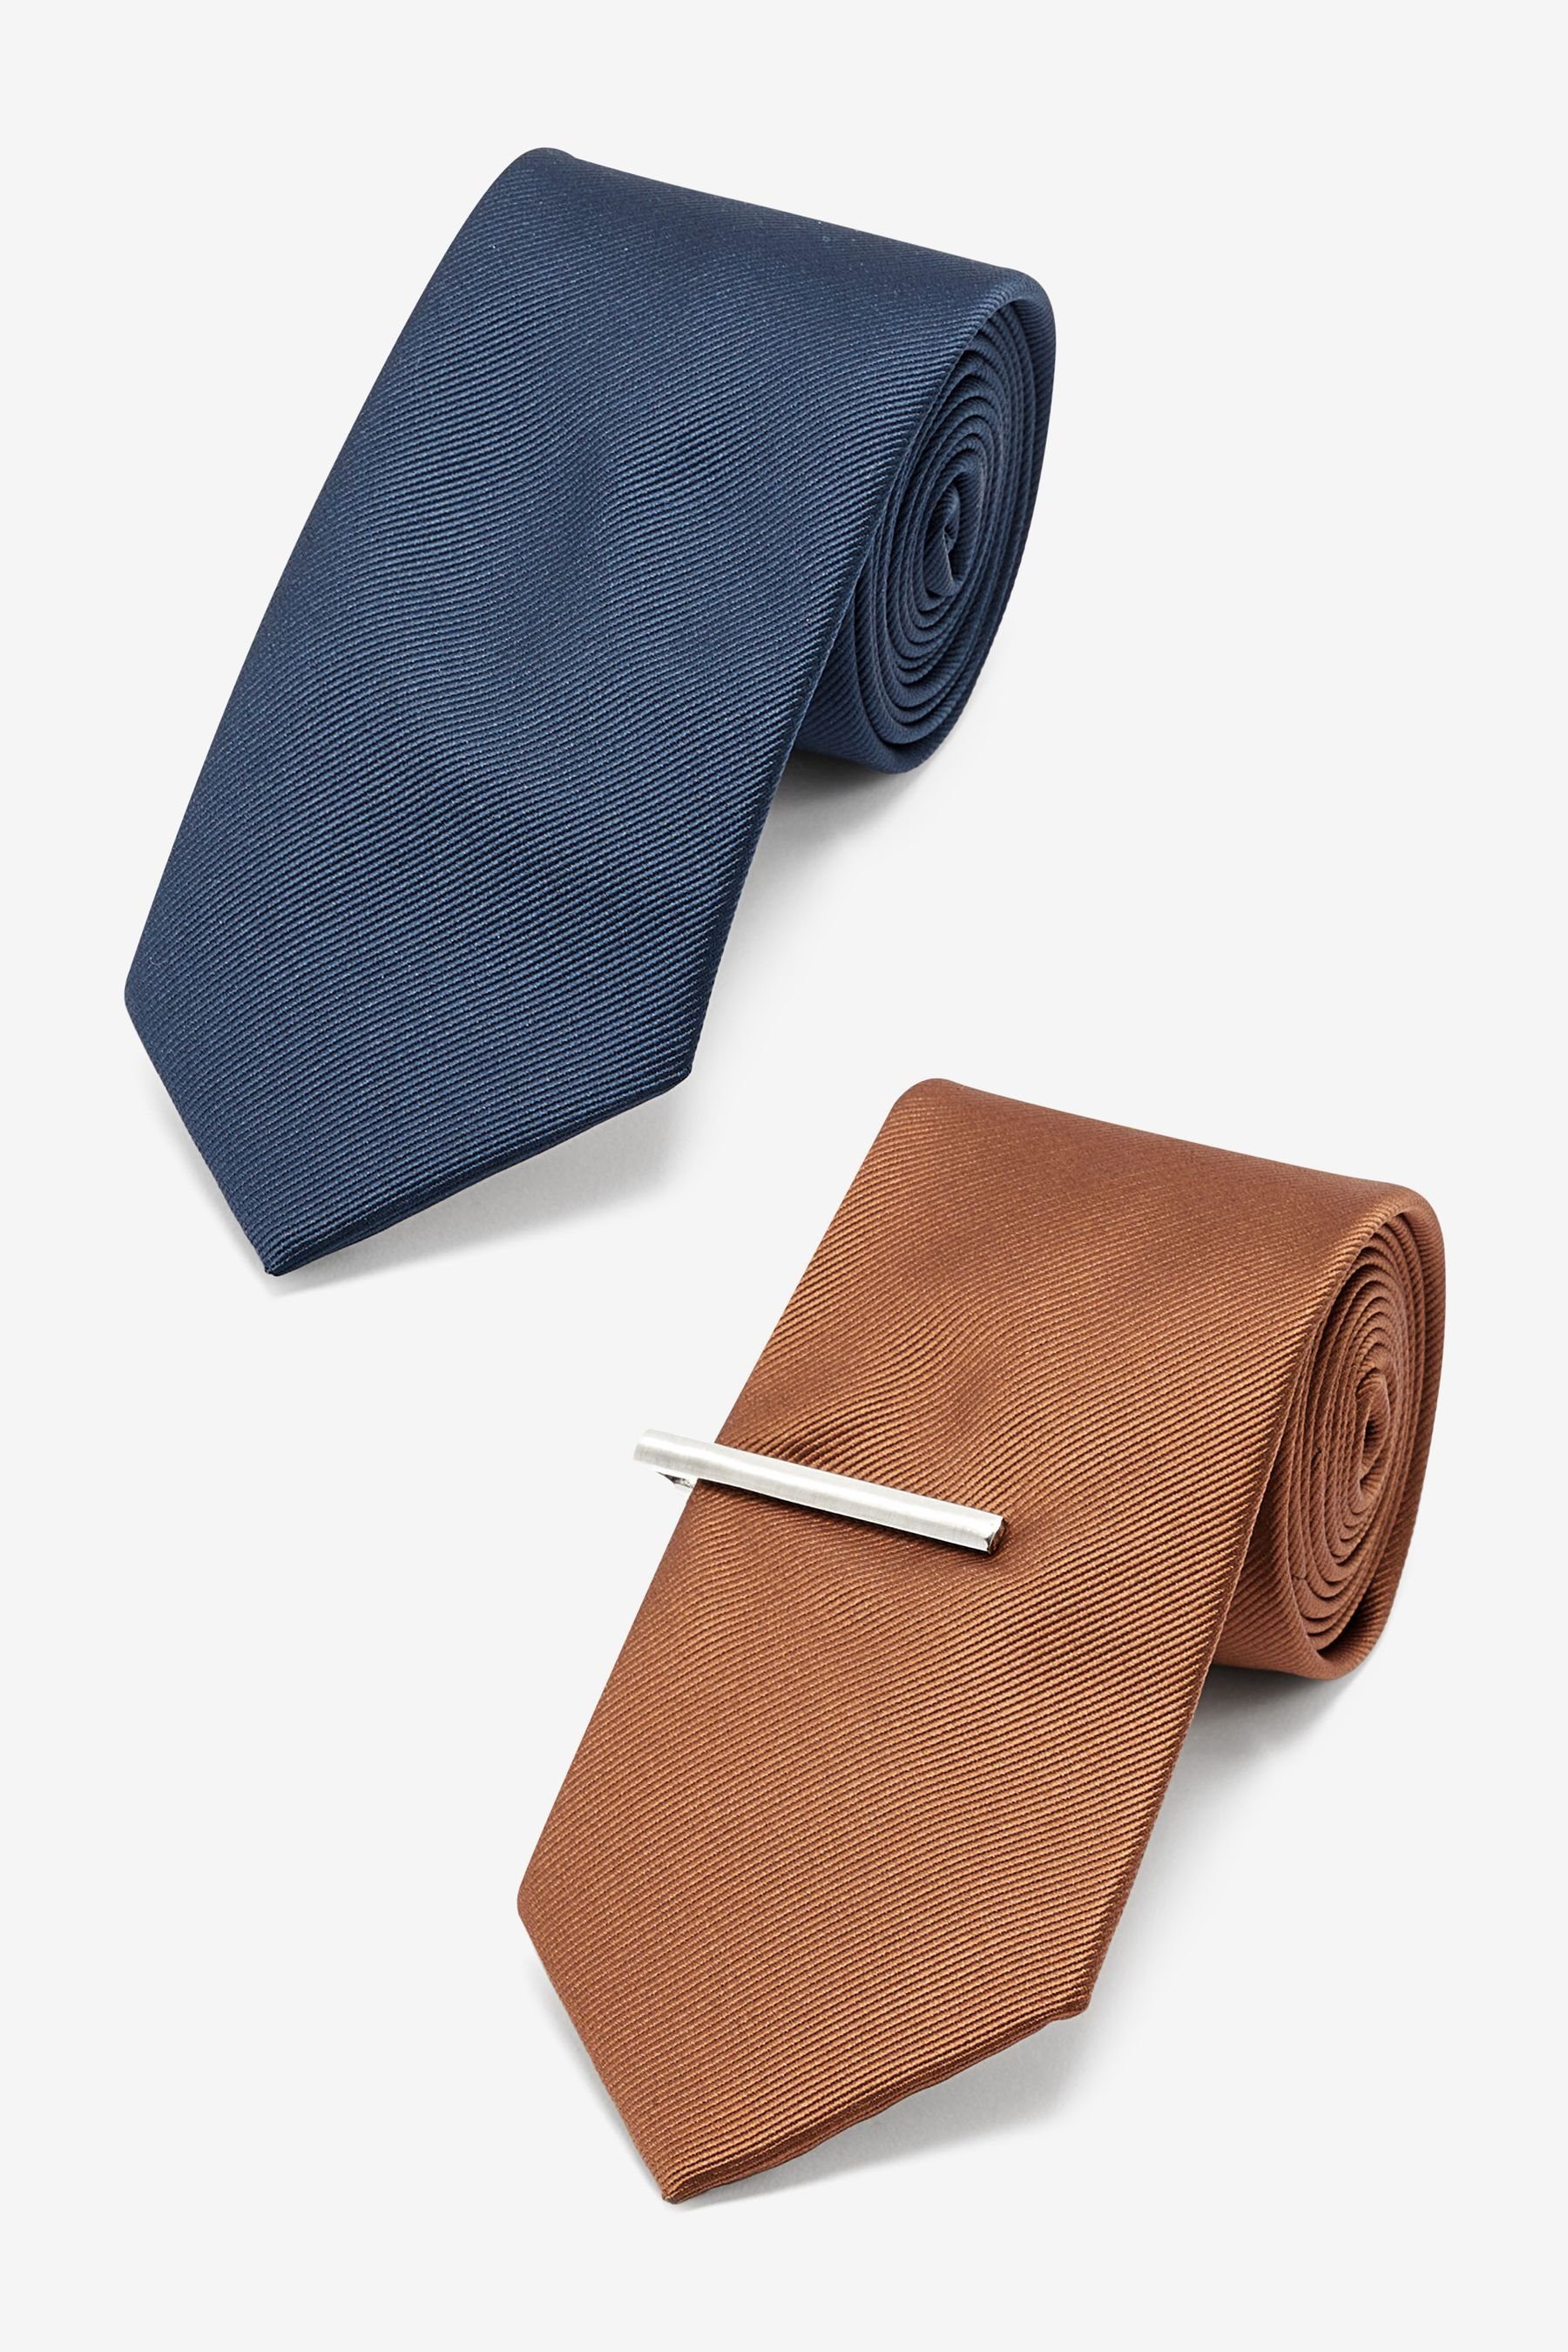 Next Krawatte Krawatten aus Twill mit Krawattennadel, 2 Stück (3-St) Navy Blue/Tan Brown